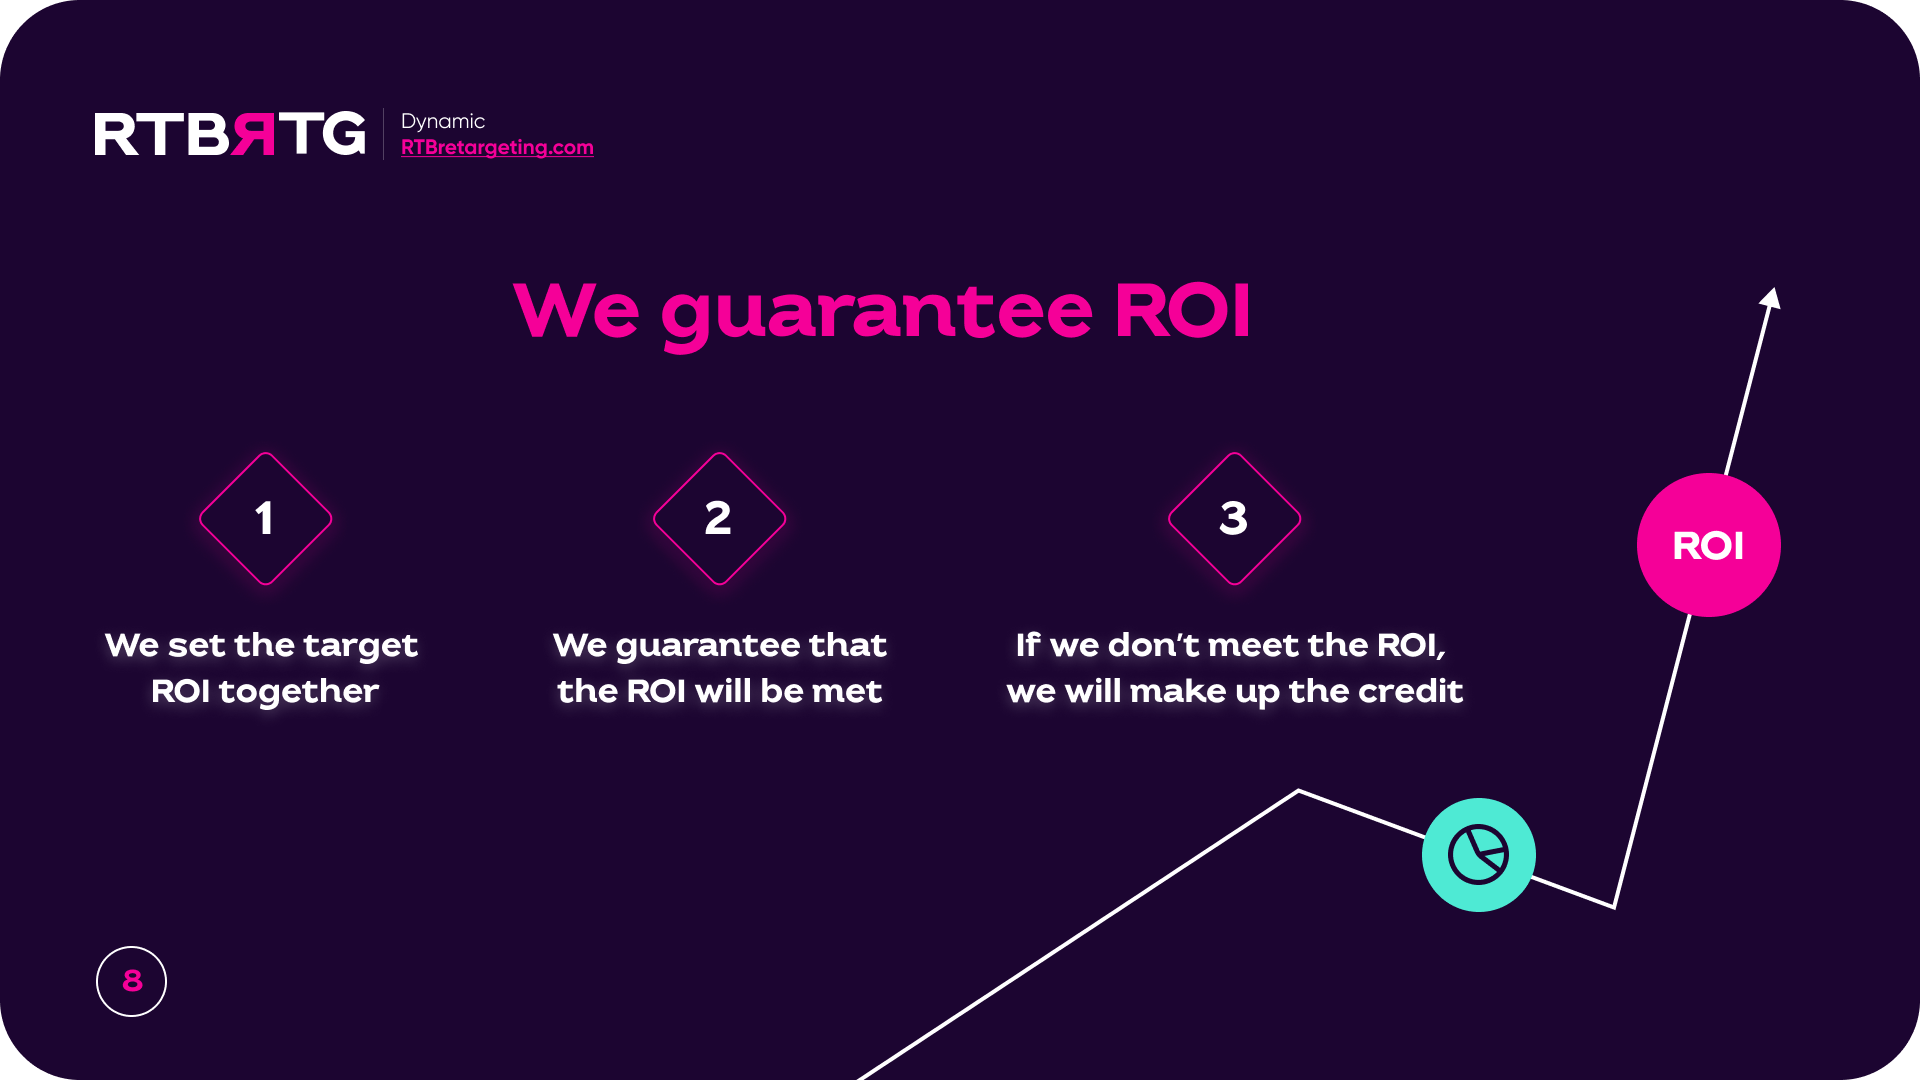 We guarantee ROI